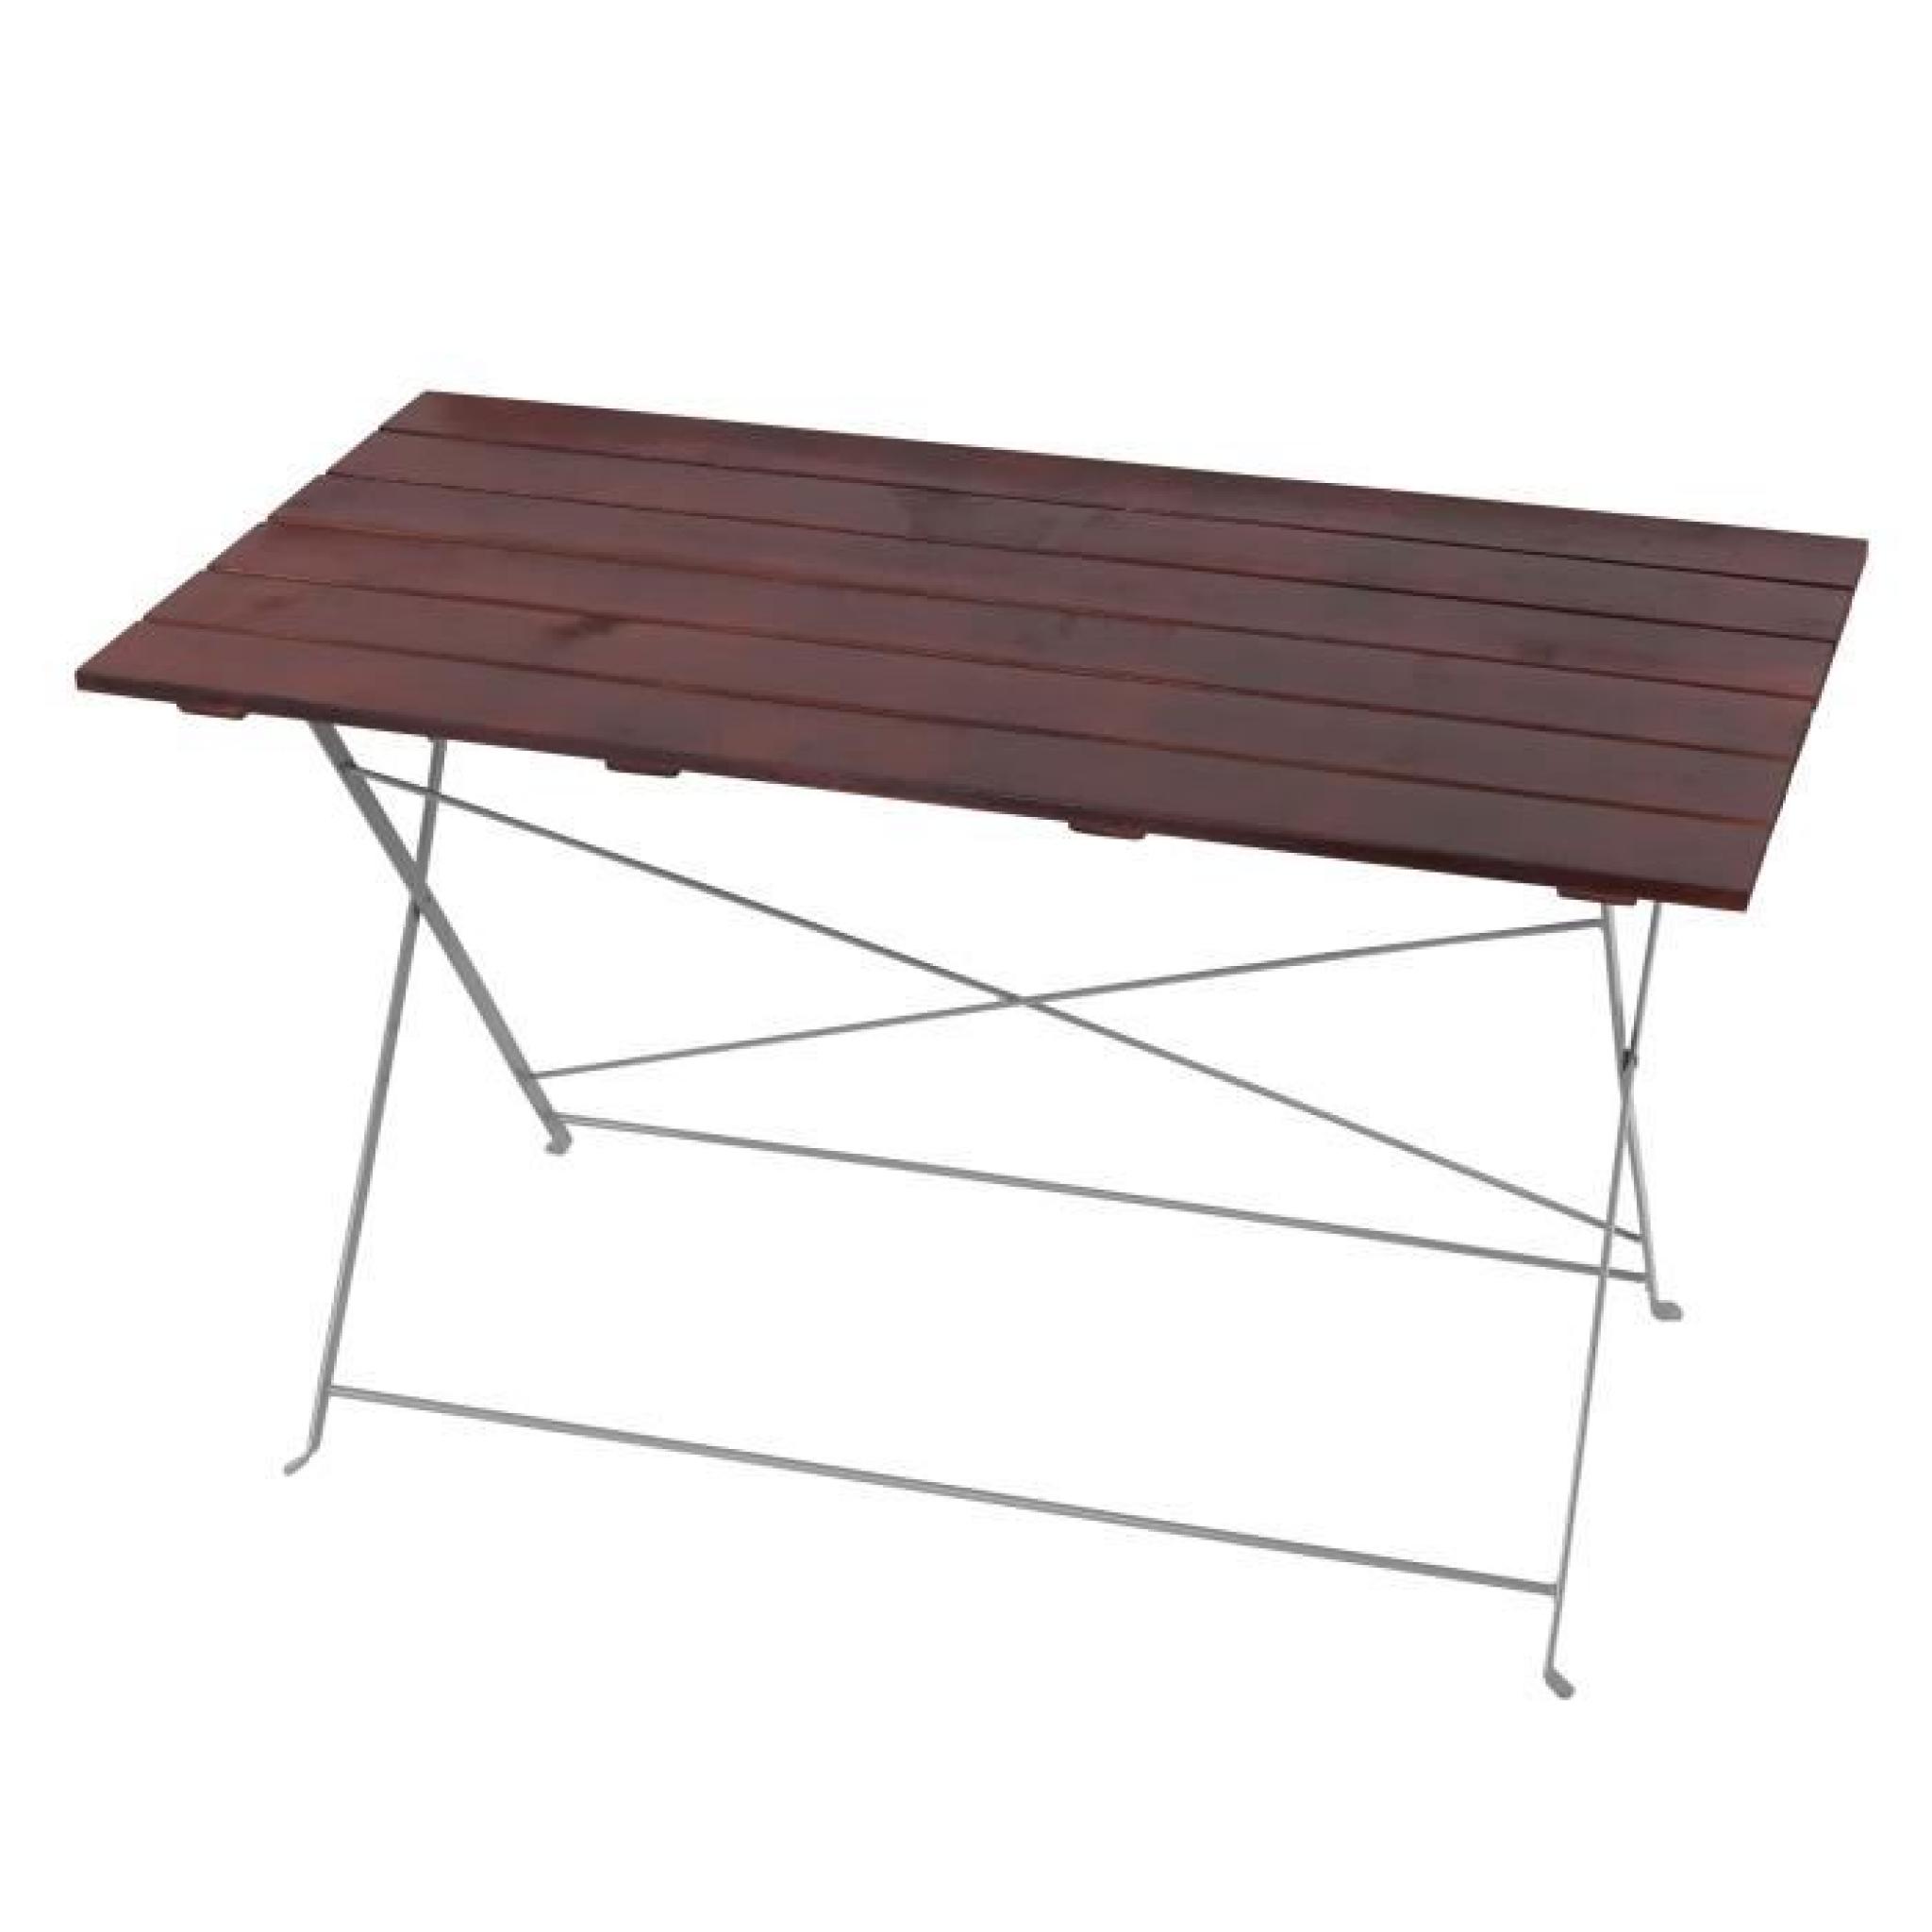 Table de jardin ou de brasserie Berlin, pliable, bois huilé,120x60x70cm ~ brun foncé.